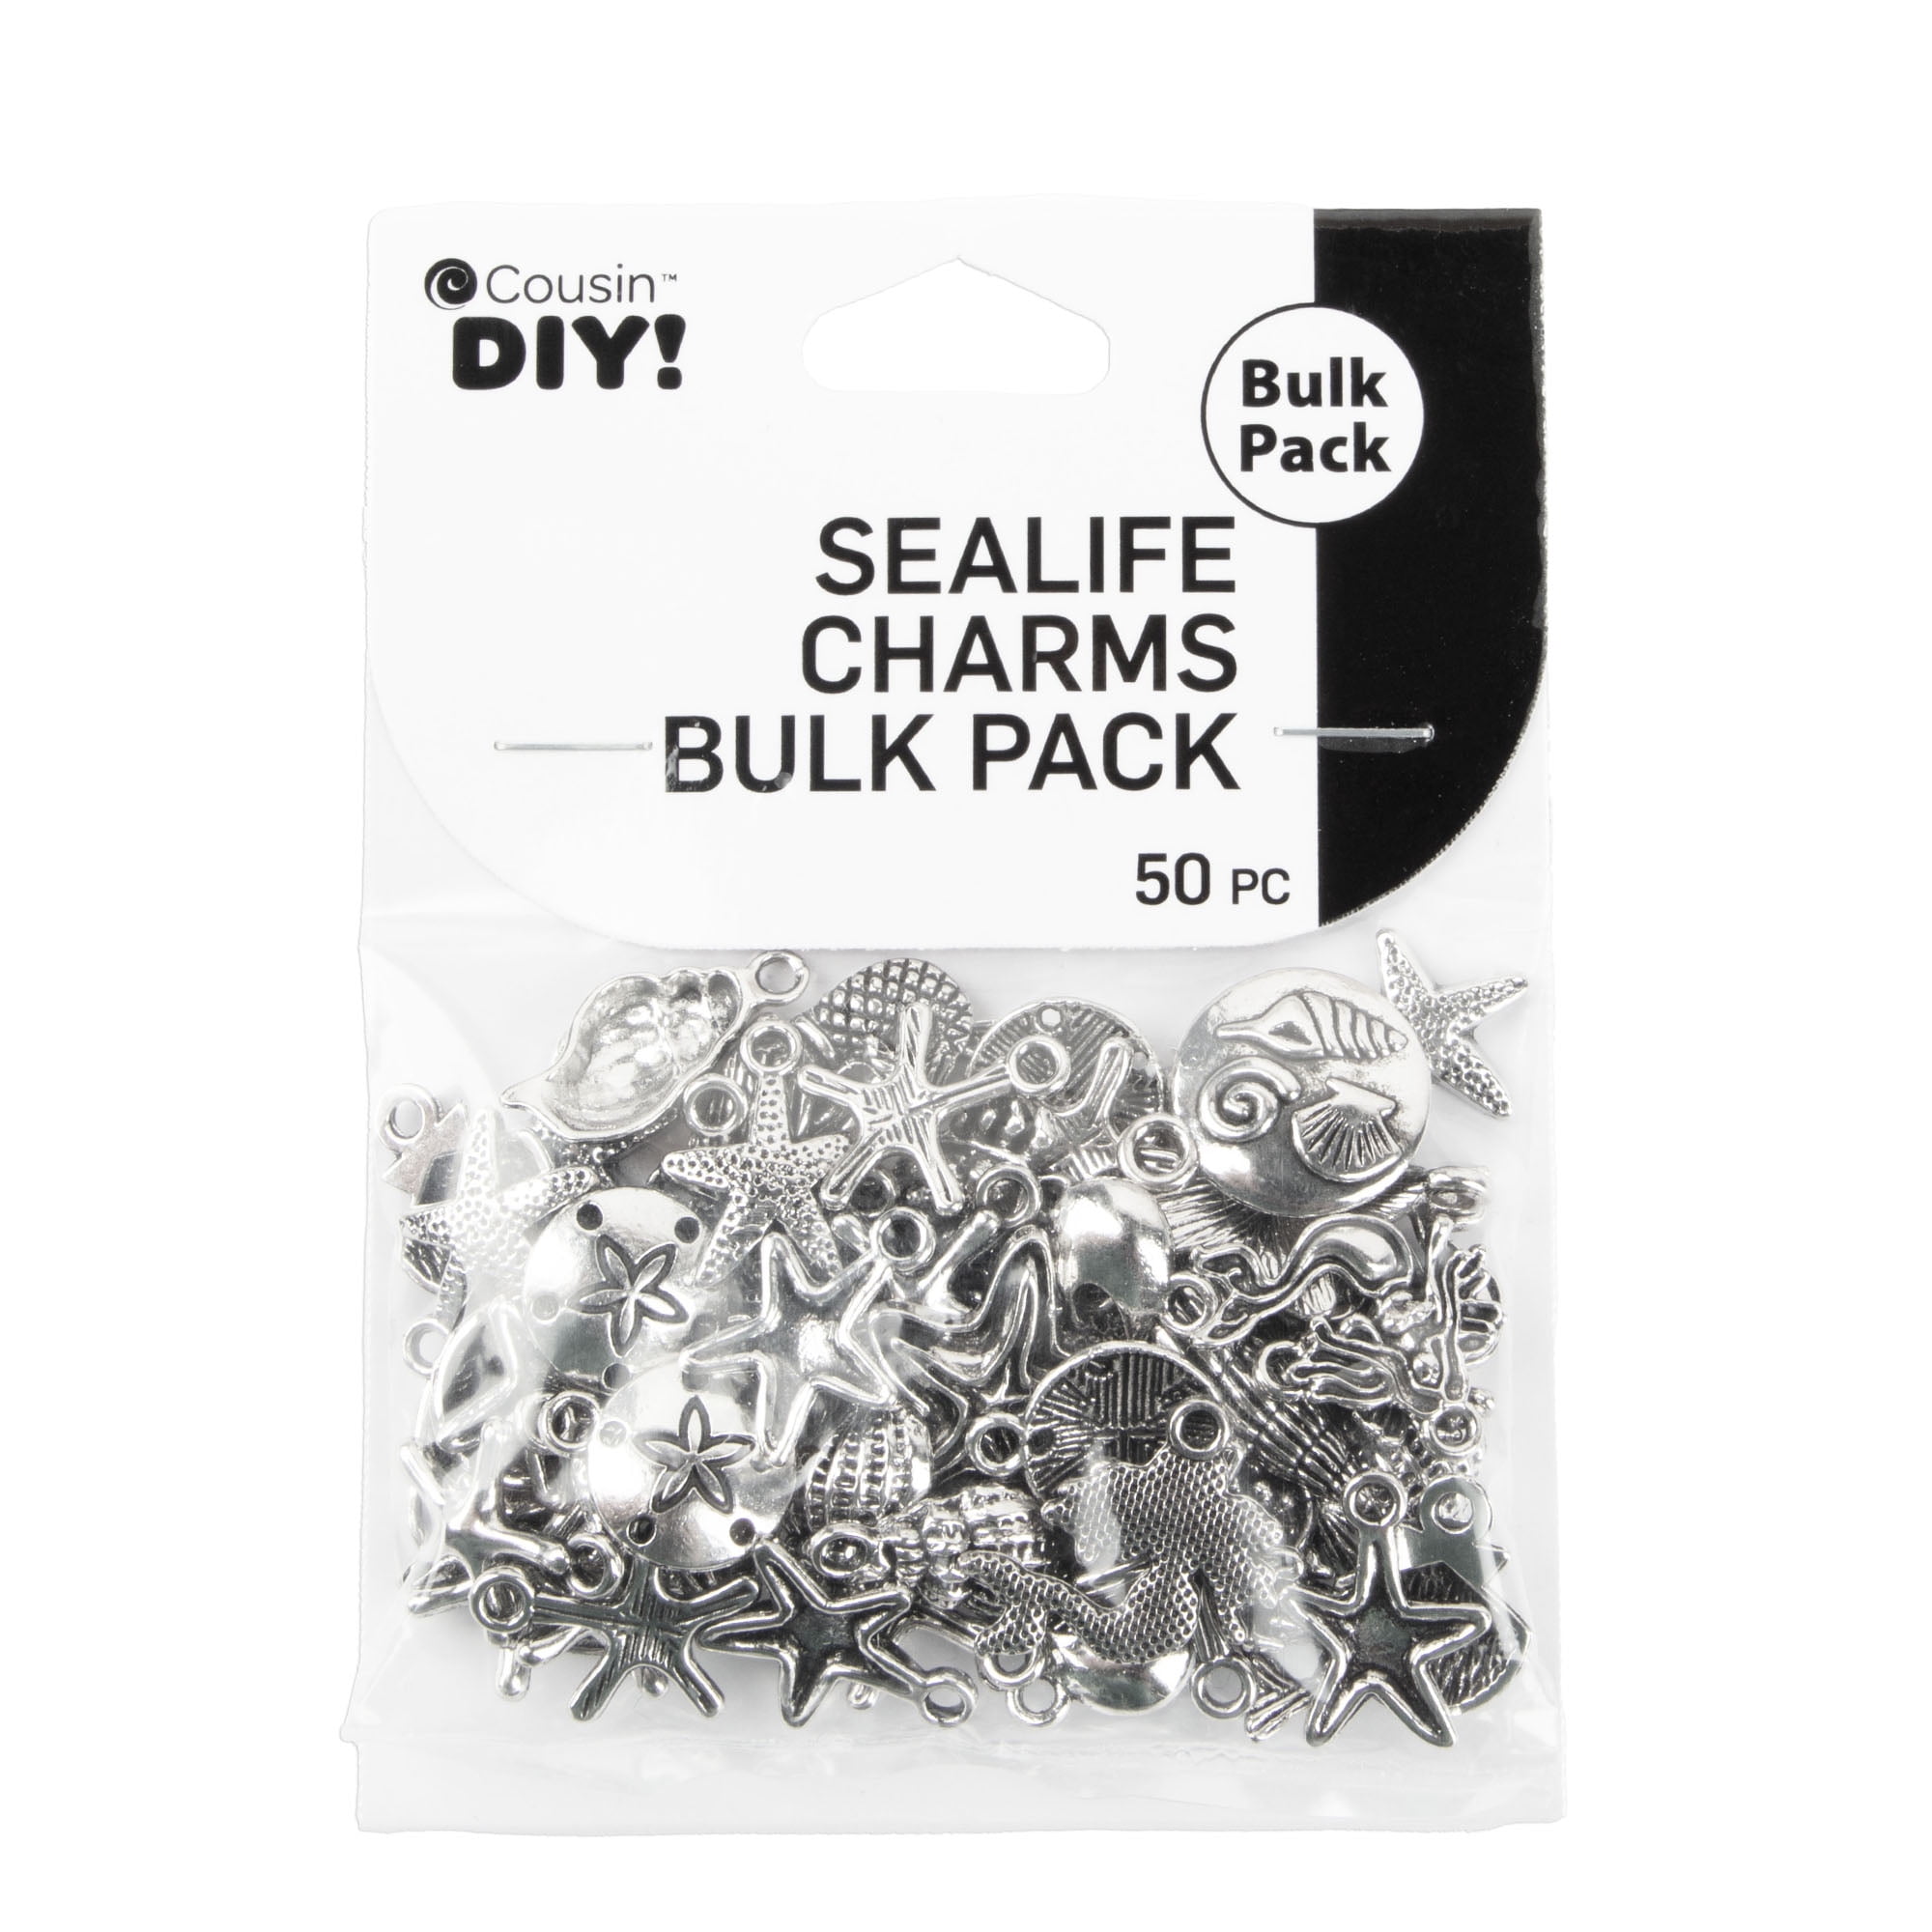 Sea Life Charm Bracelet Kit, Do It Yourself Jewelry Making Kit